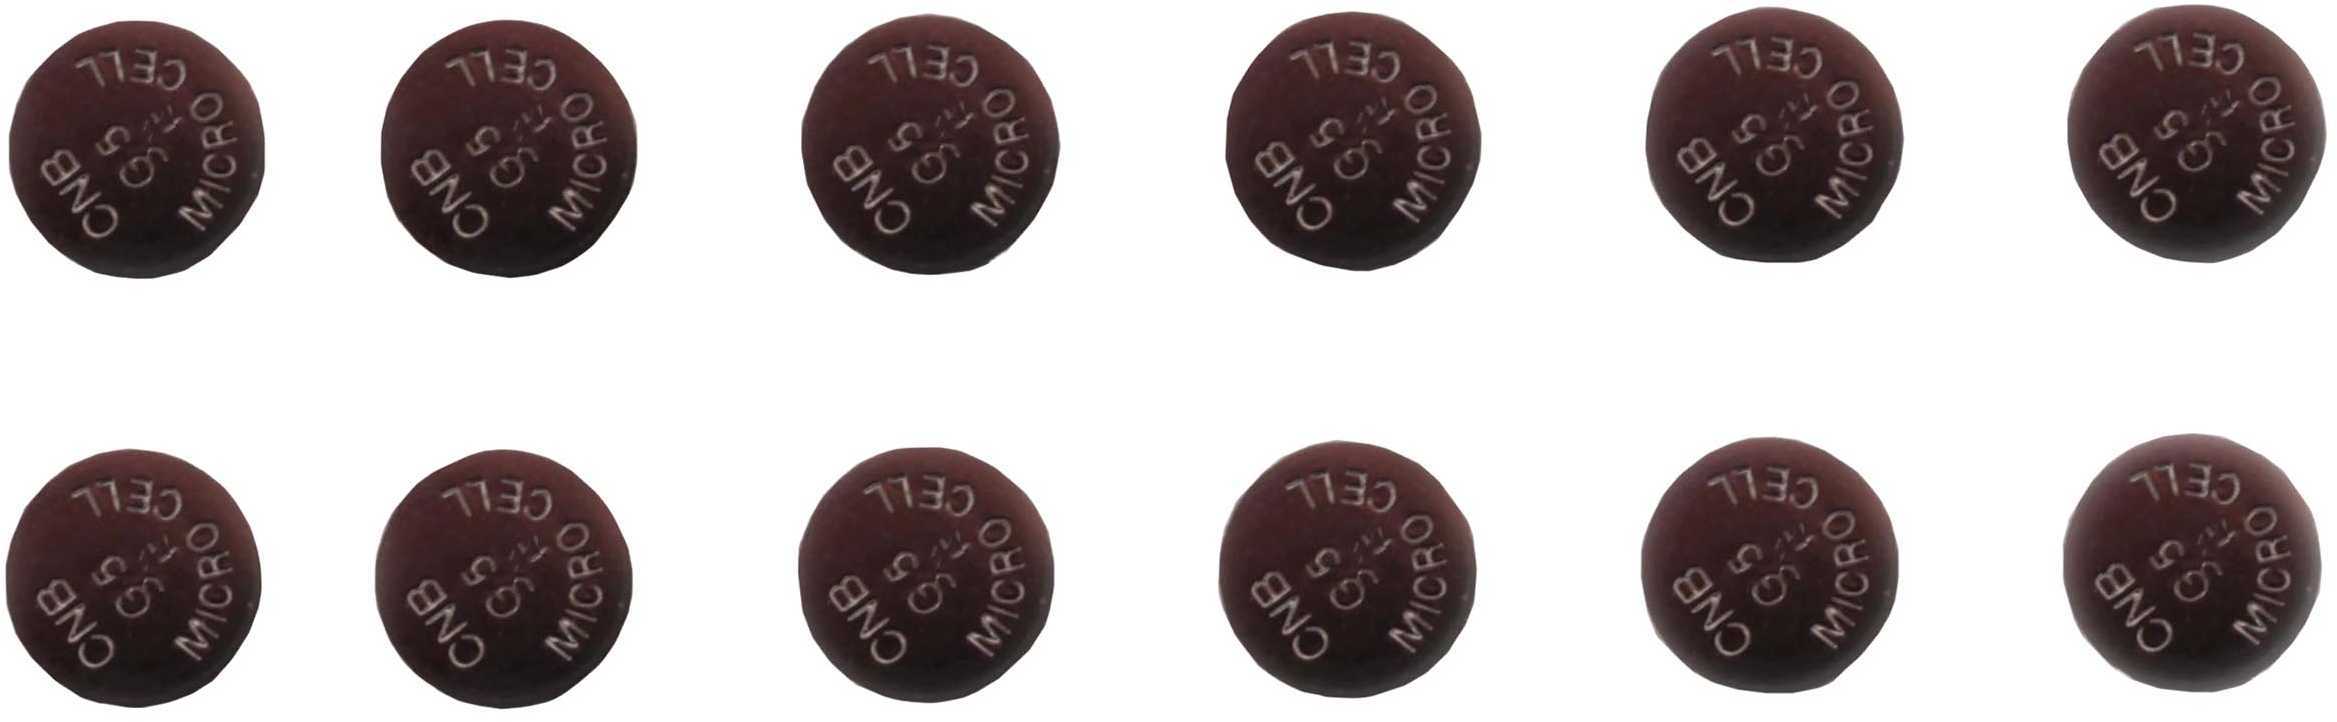 LaserLyte Batteries 393- 12 Pack: MBS-1, MBS-1722 BAT-393